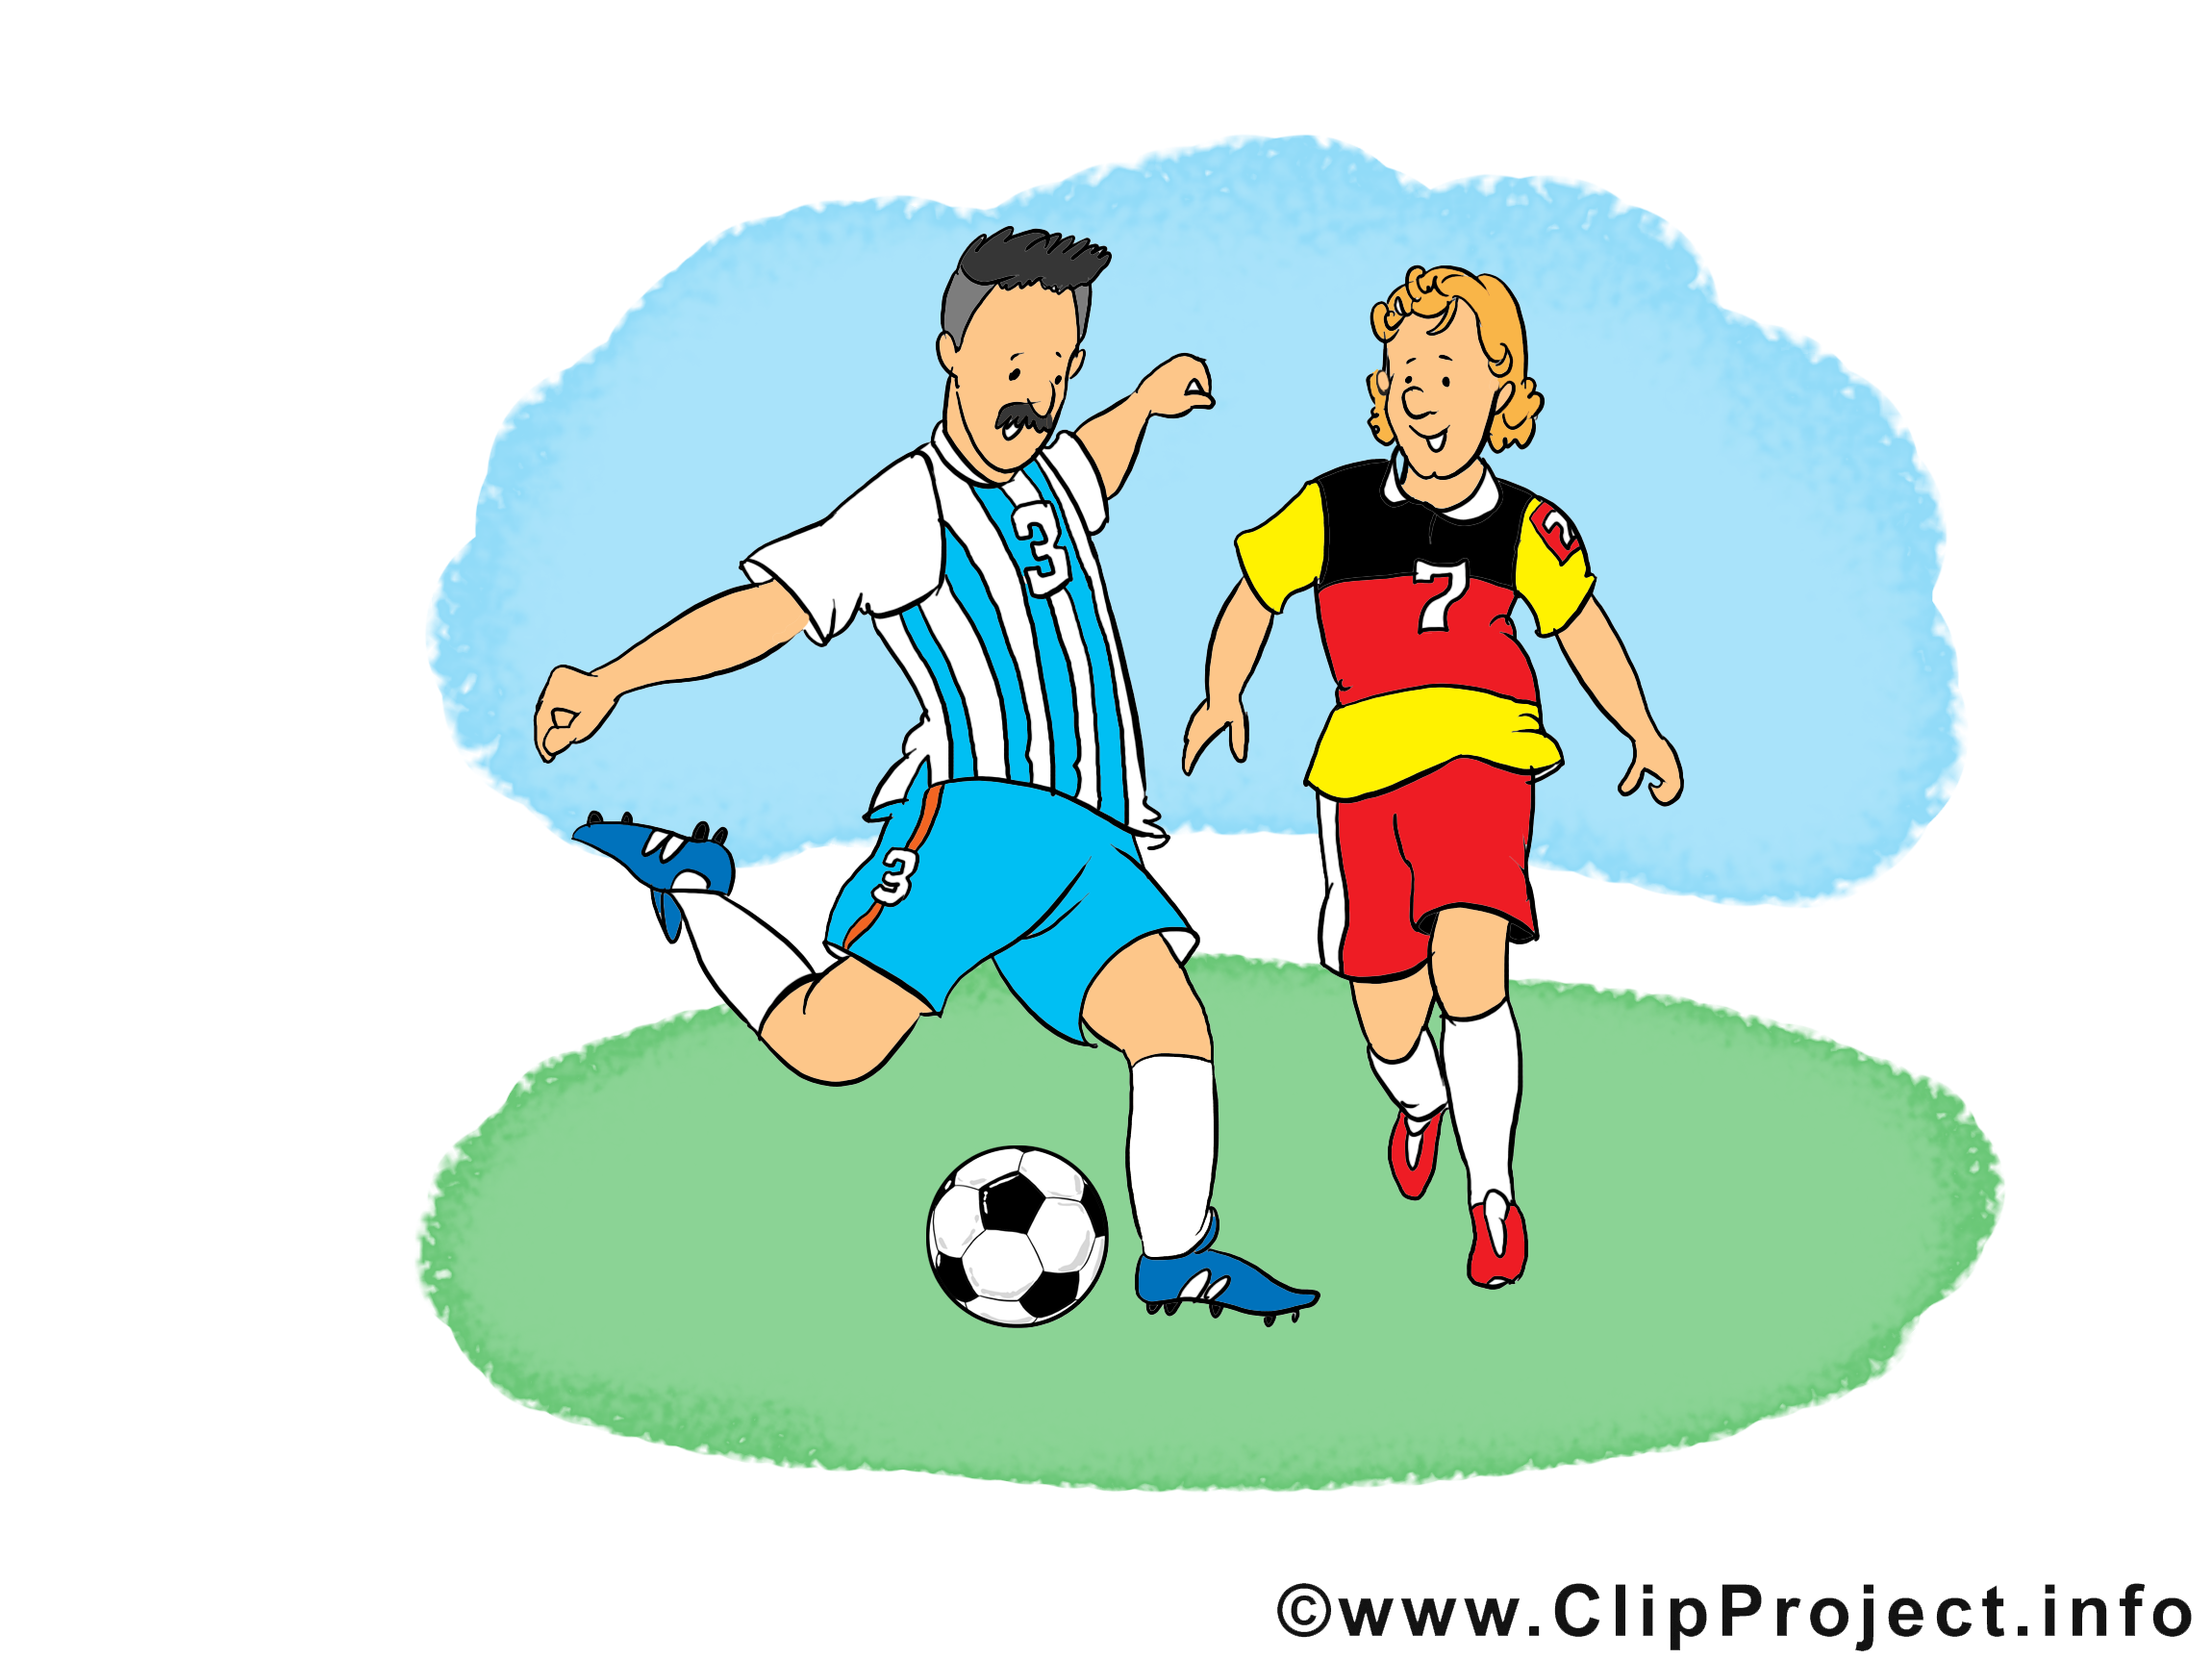 Footballeurs cliparts gratuis - Football images